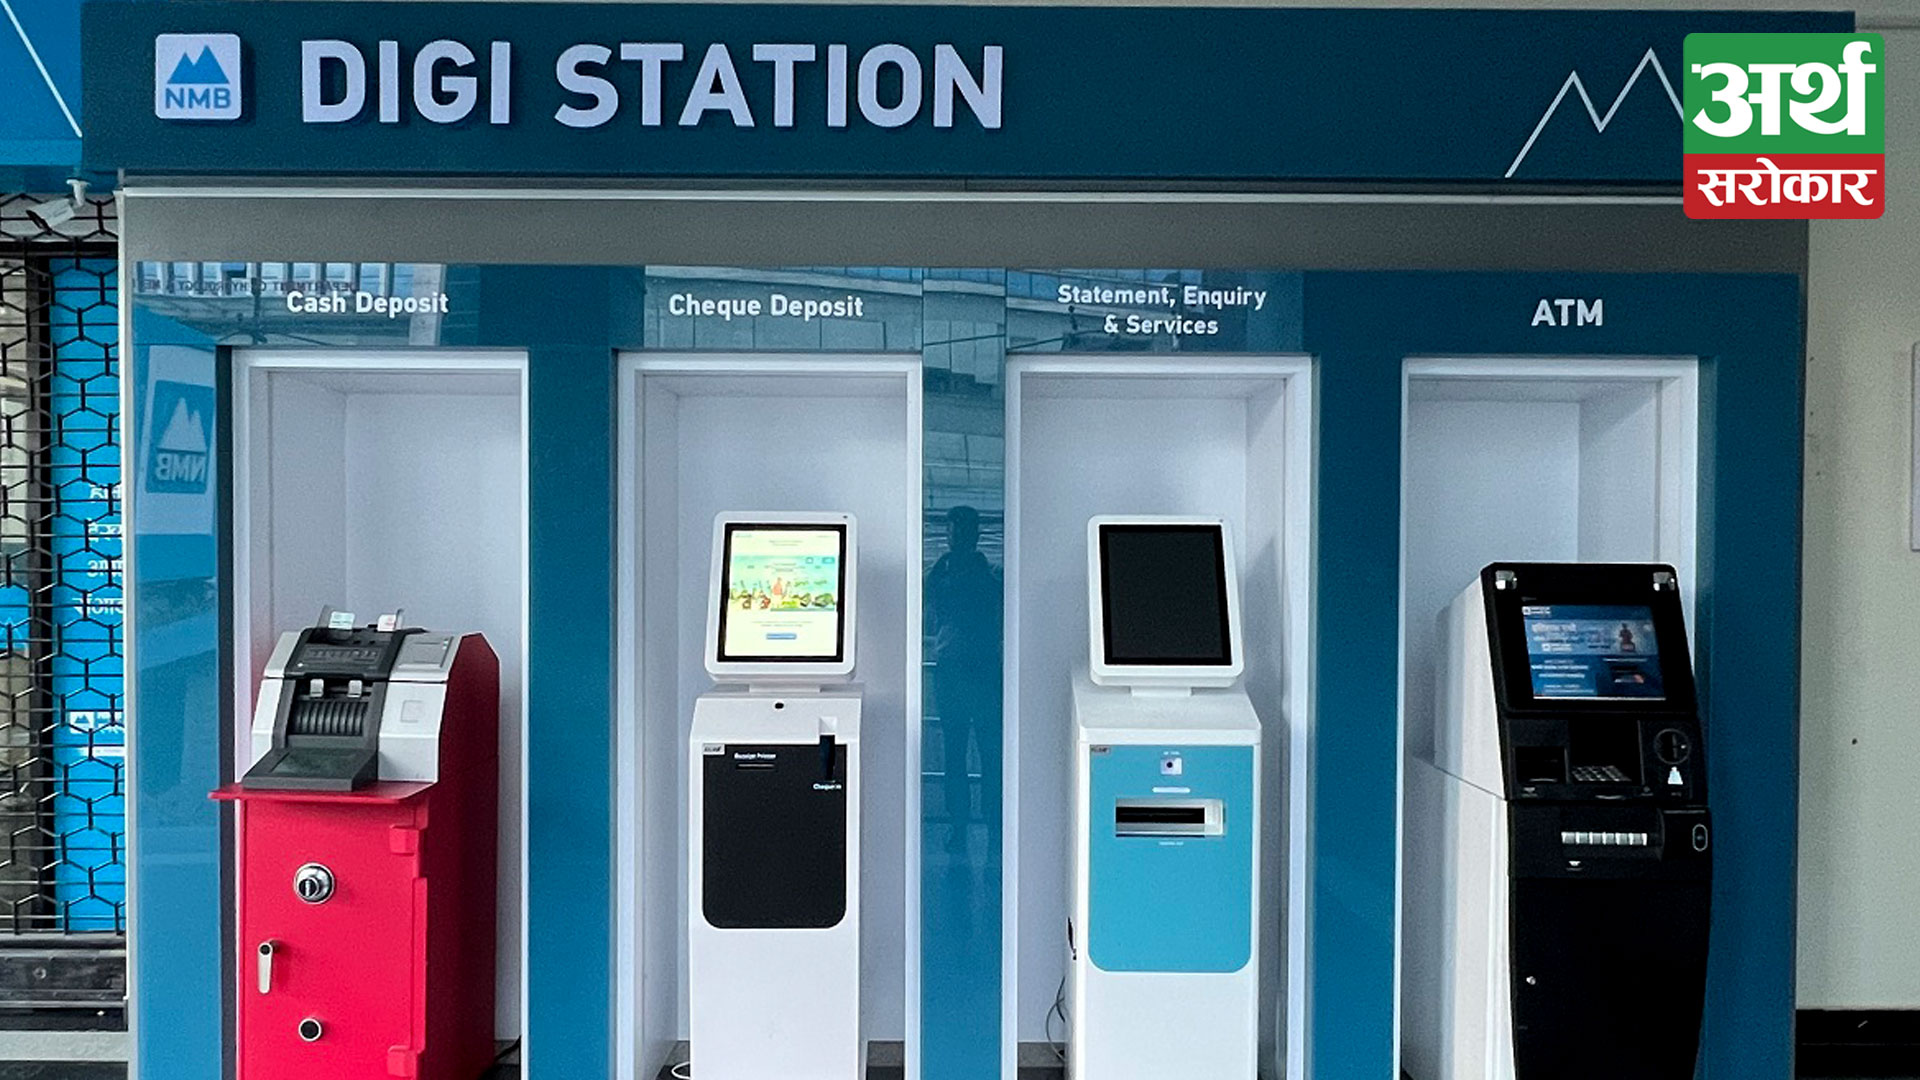 NMB Bank launches Digi Station